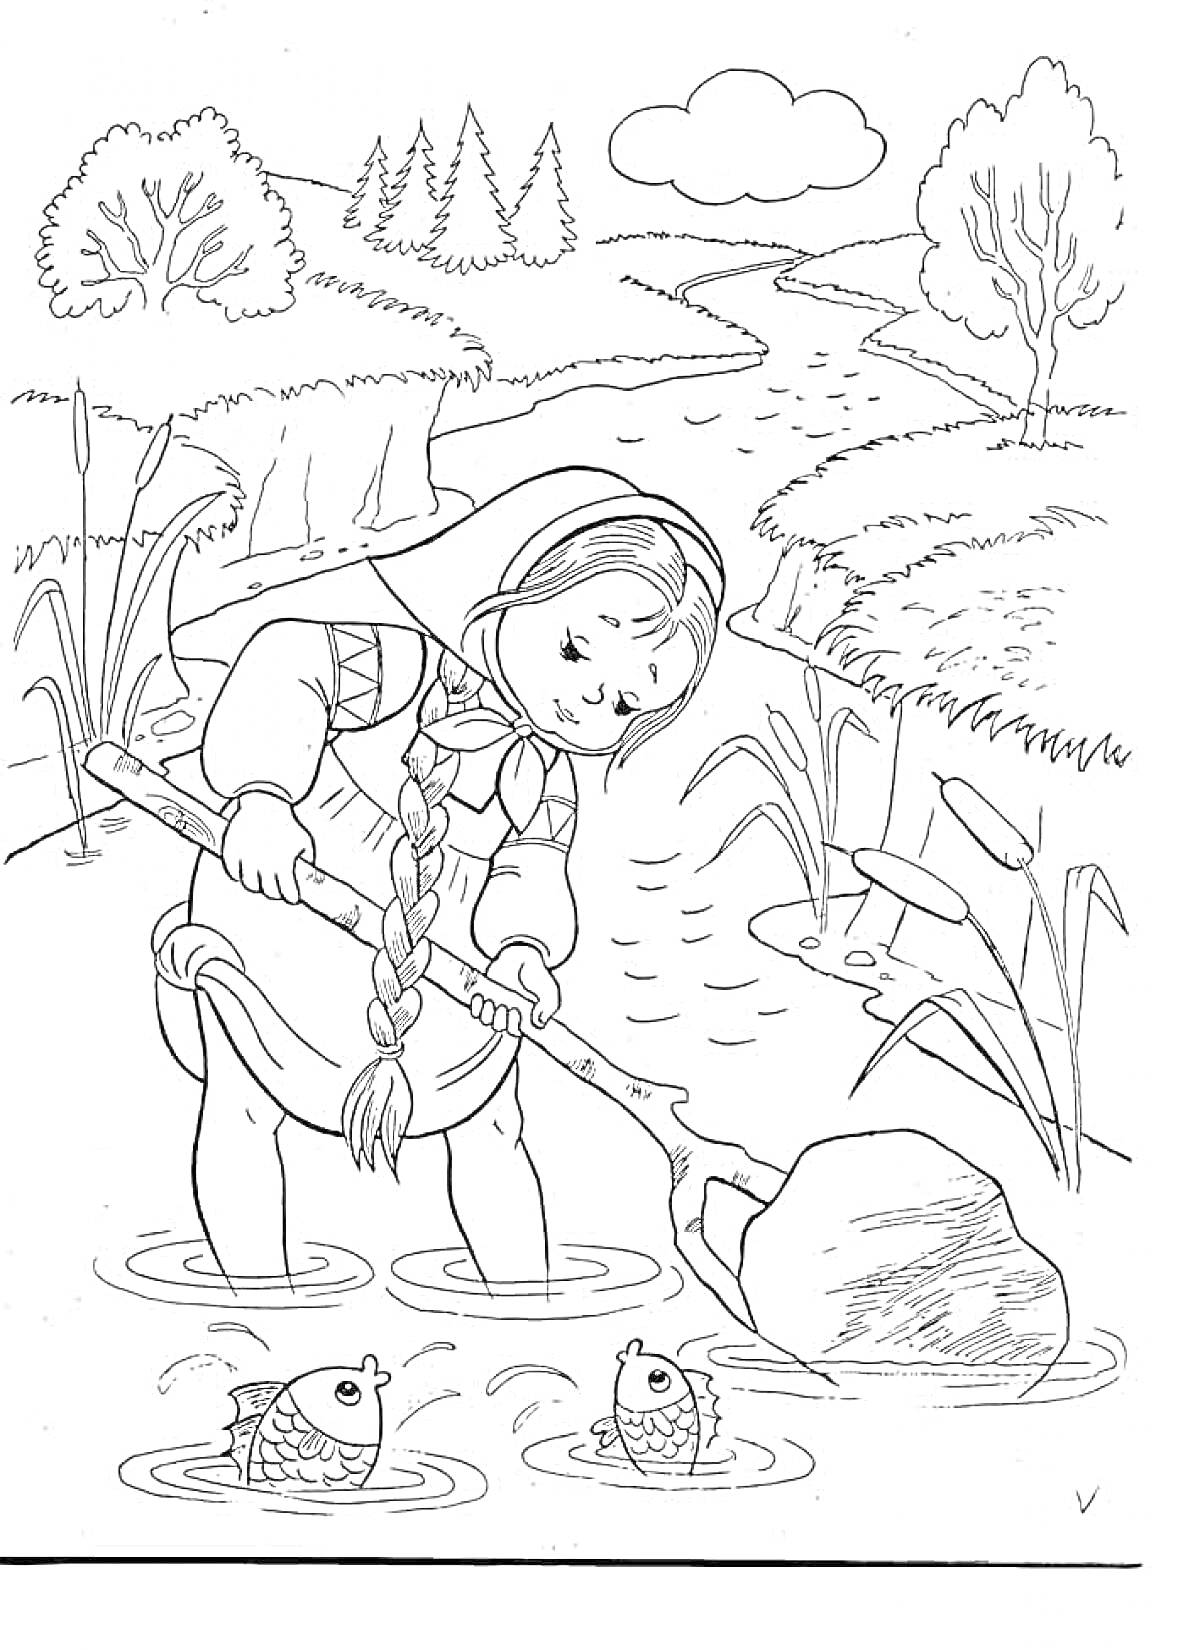 На раскраске изображено: Девочка, Речка, Лопата, Природа, Деревья, Облака, Гуси-лебеди, Рыба